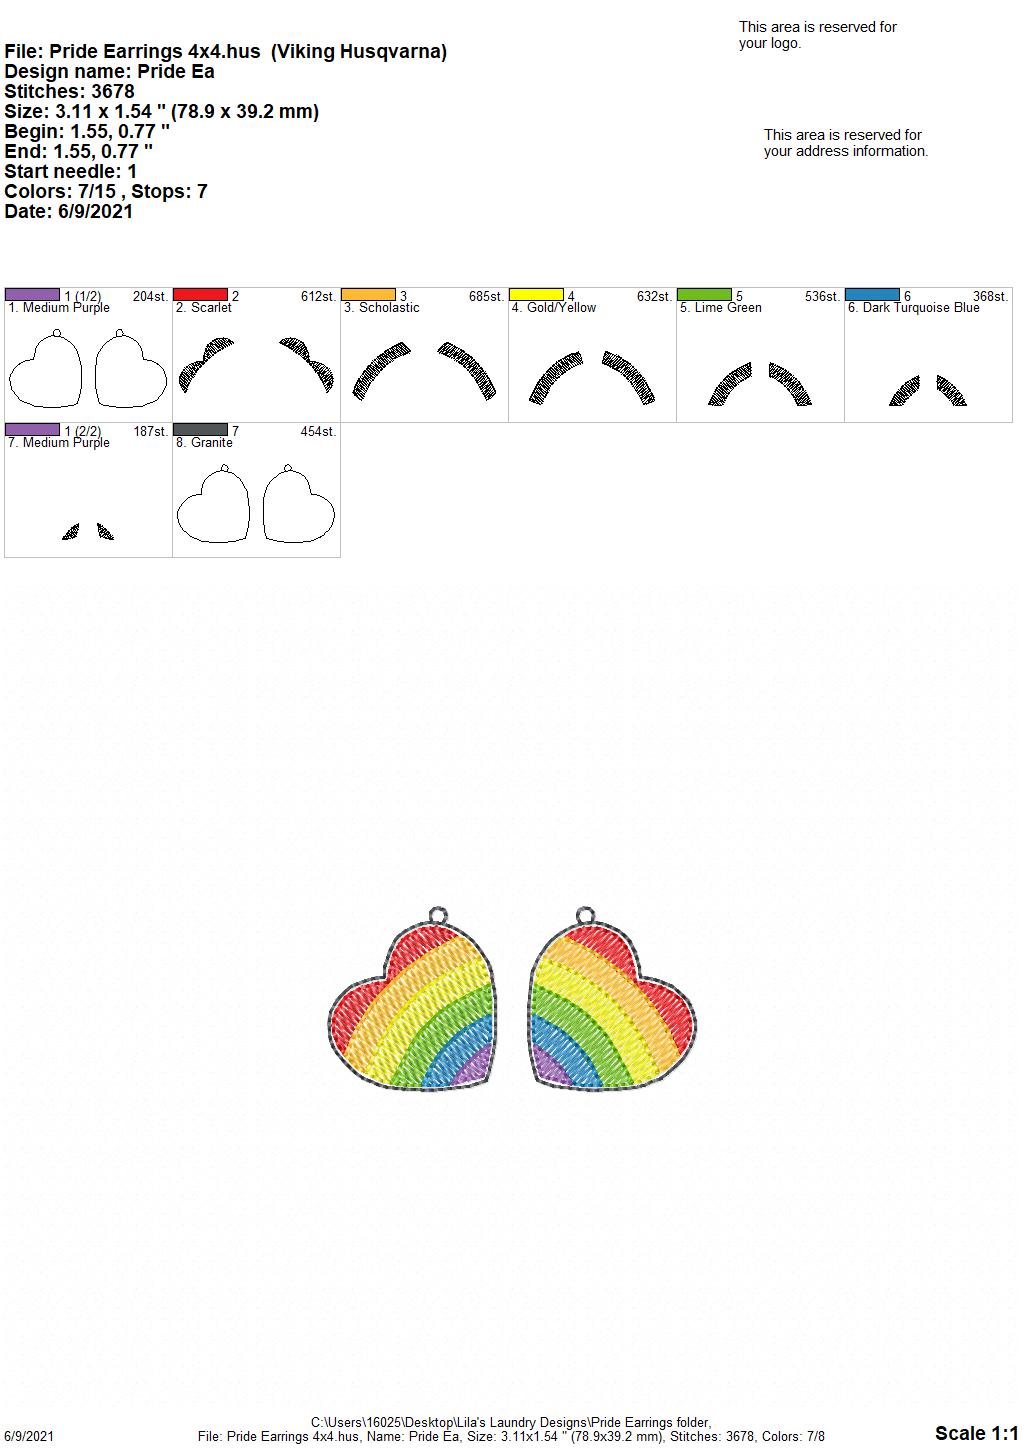 Pride Earrings - 1 Size - Digital Embroidery Design